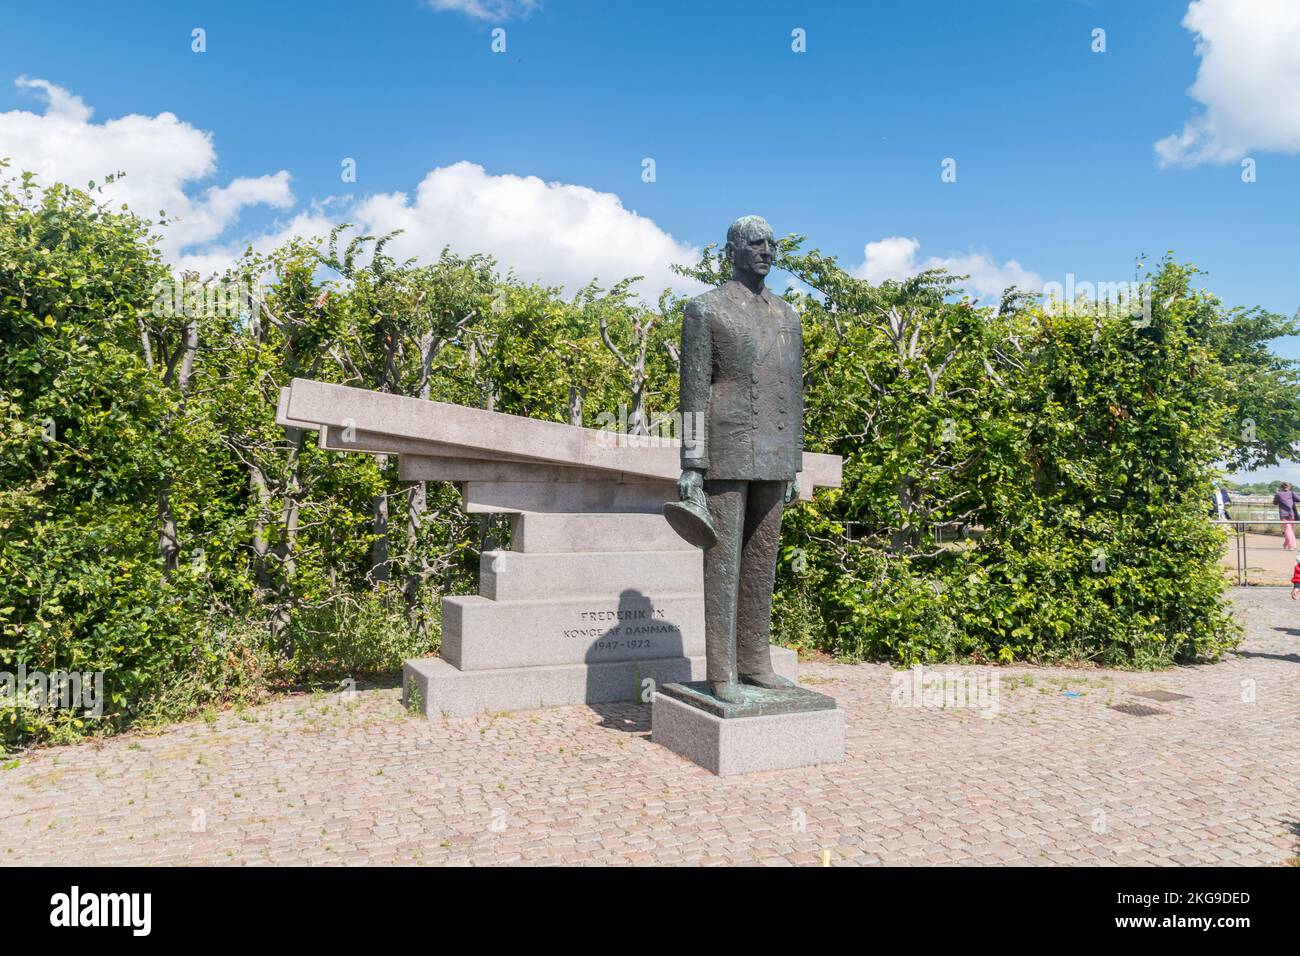 Copenhagen, Denmark - July 26, 2022: Memorial sculpture of Frederick IX of Denmark (Danish: Christian Frederik Franz Michael Carl Valdemar Georg). Fre Stock Photo